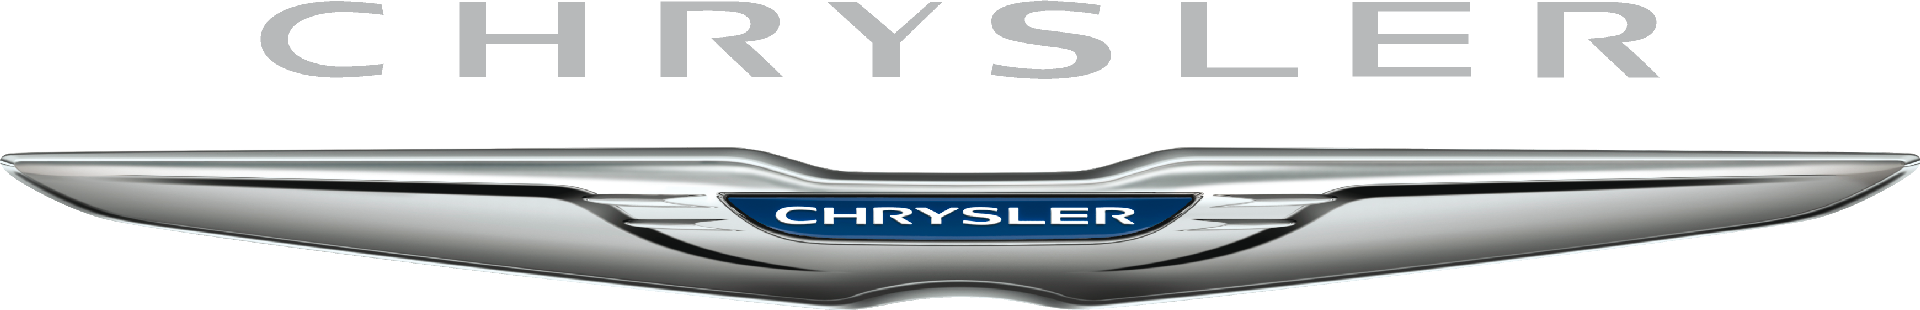 image of Chrysler logo